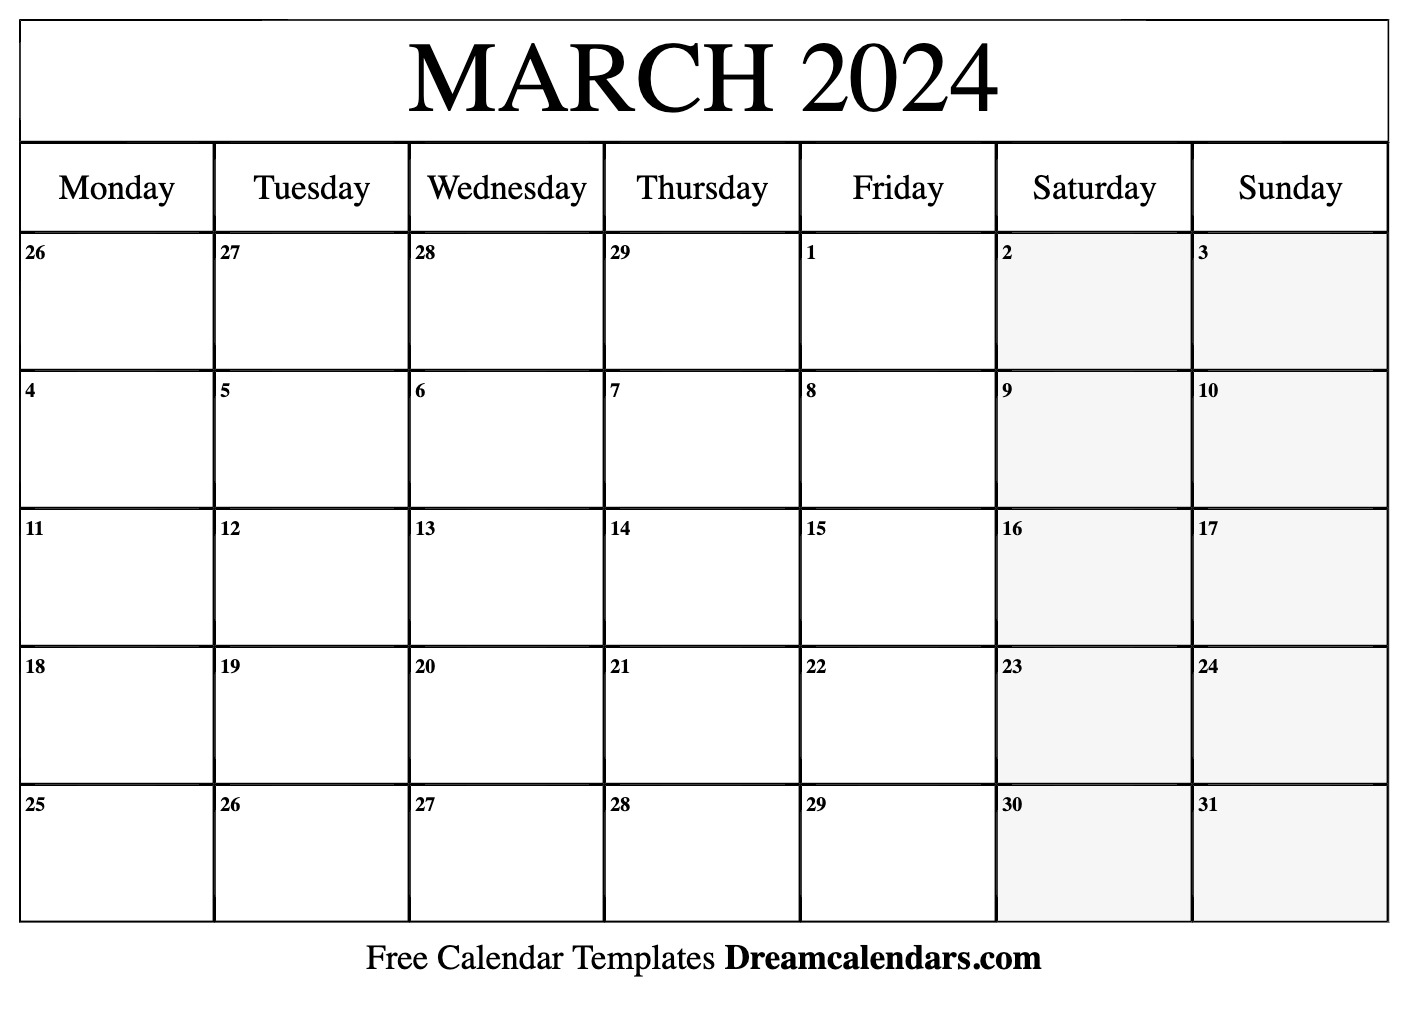 march-2024-calendar-rashifal-latest-top-the-best-famous-july-calendar